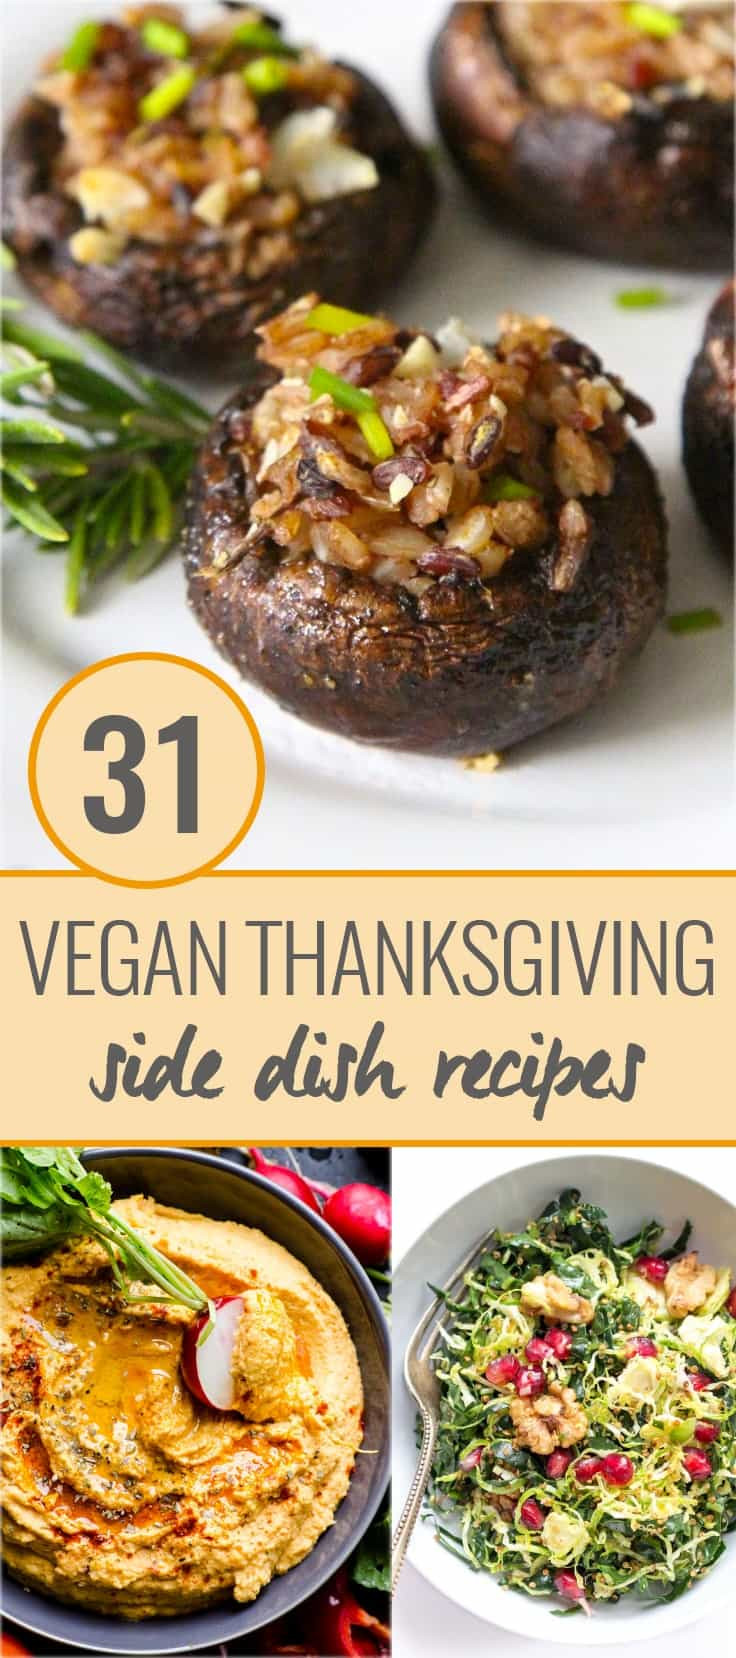 Vegetarian Thanksgiving Dishes
 31 Vegan Thanksgiving Side Dishes Simply Quinoa